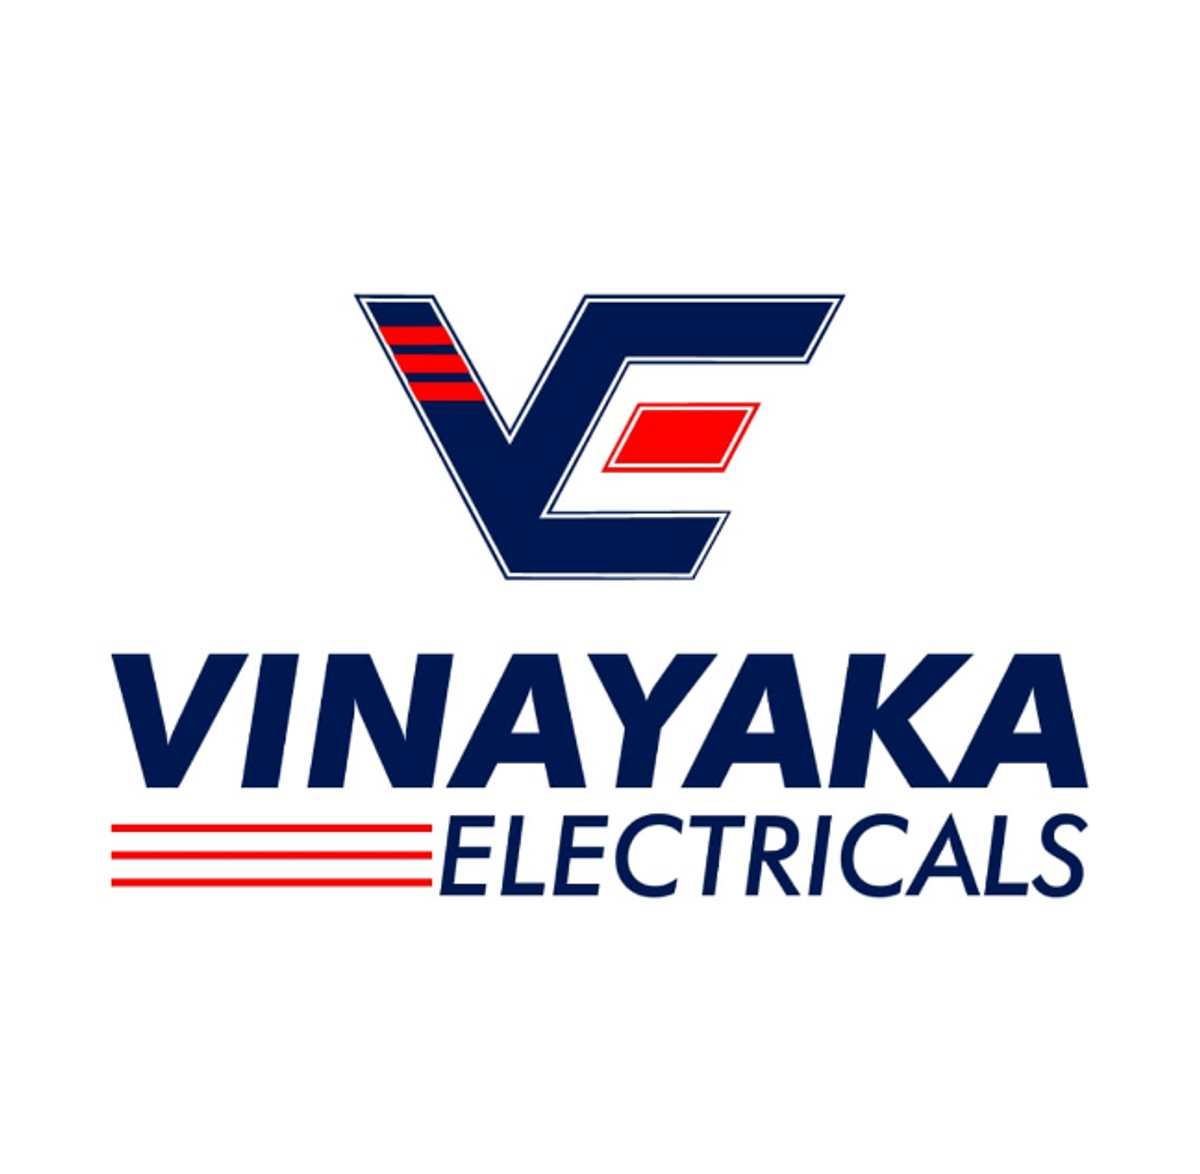 VINAYAKA ELECTRICALS